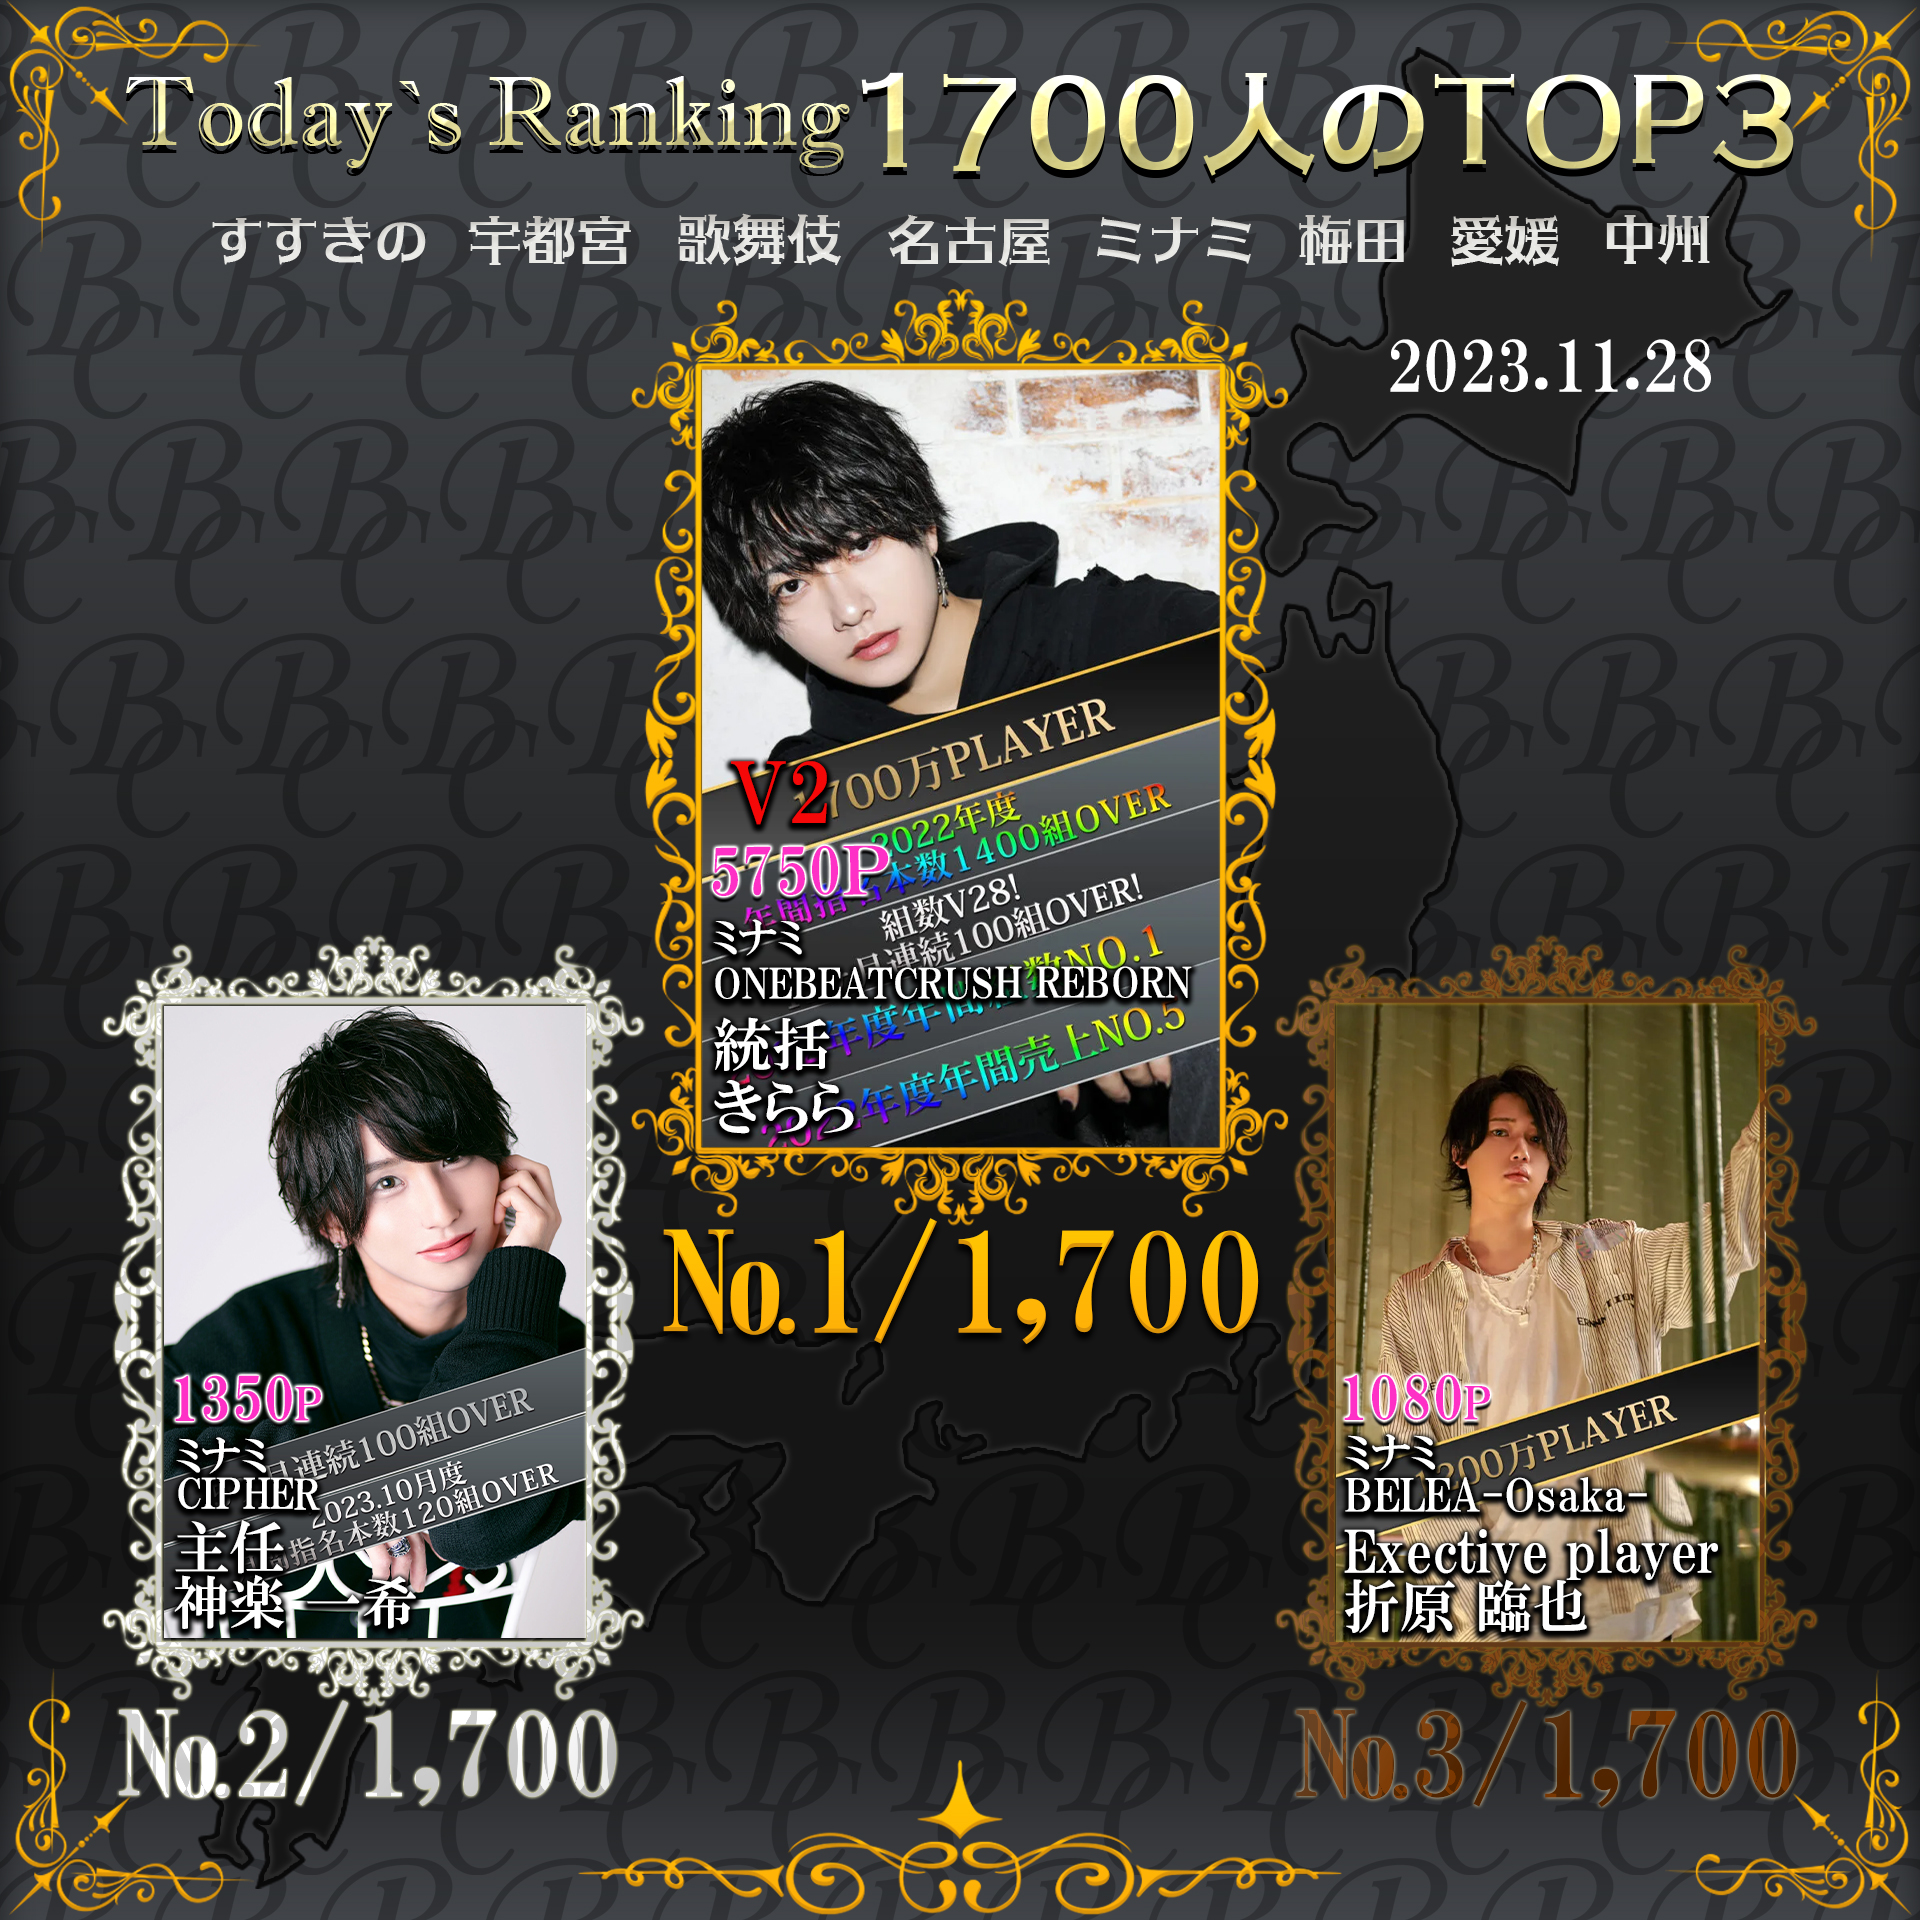 11/28 Today’s Ranking